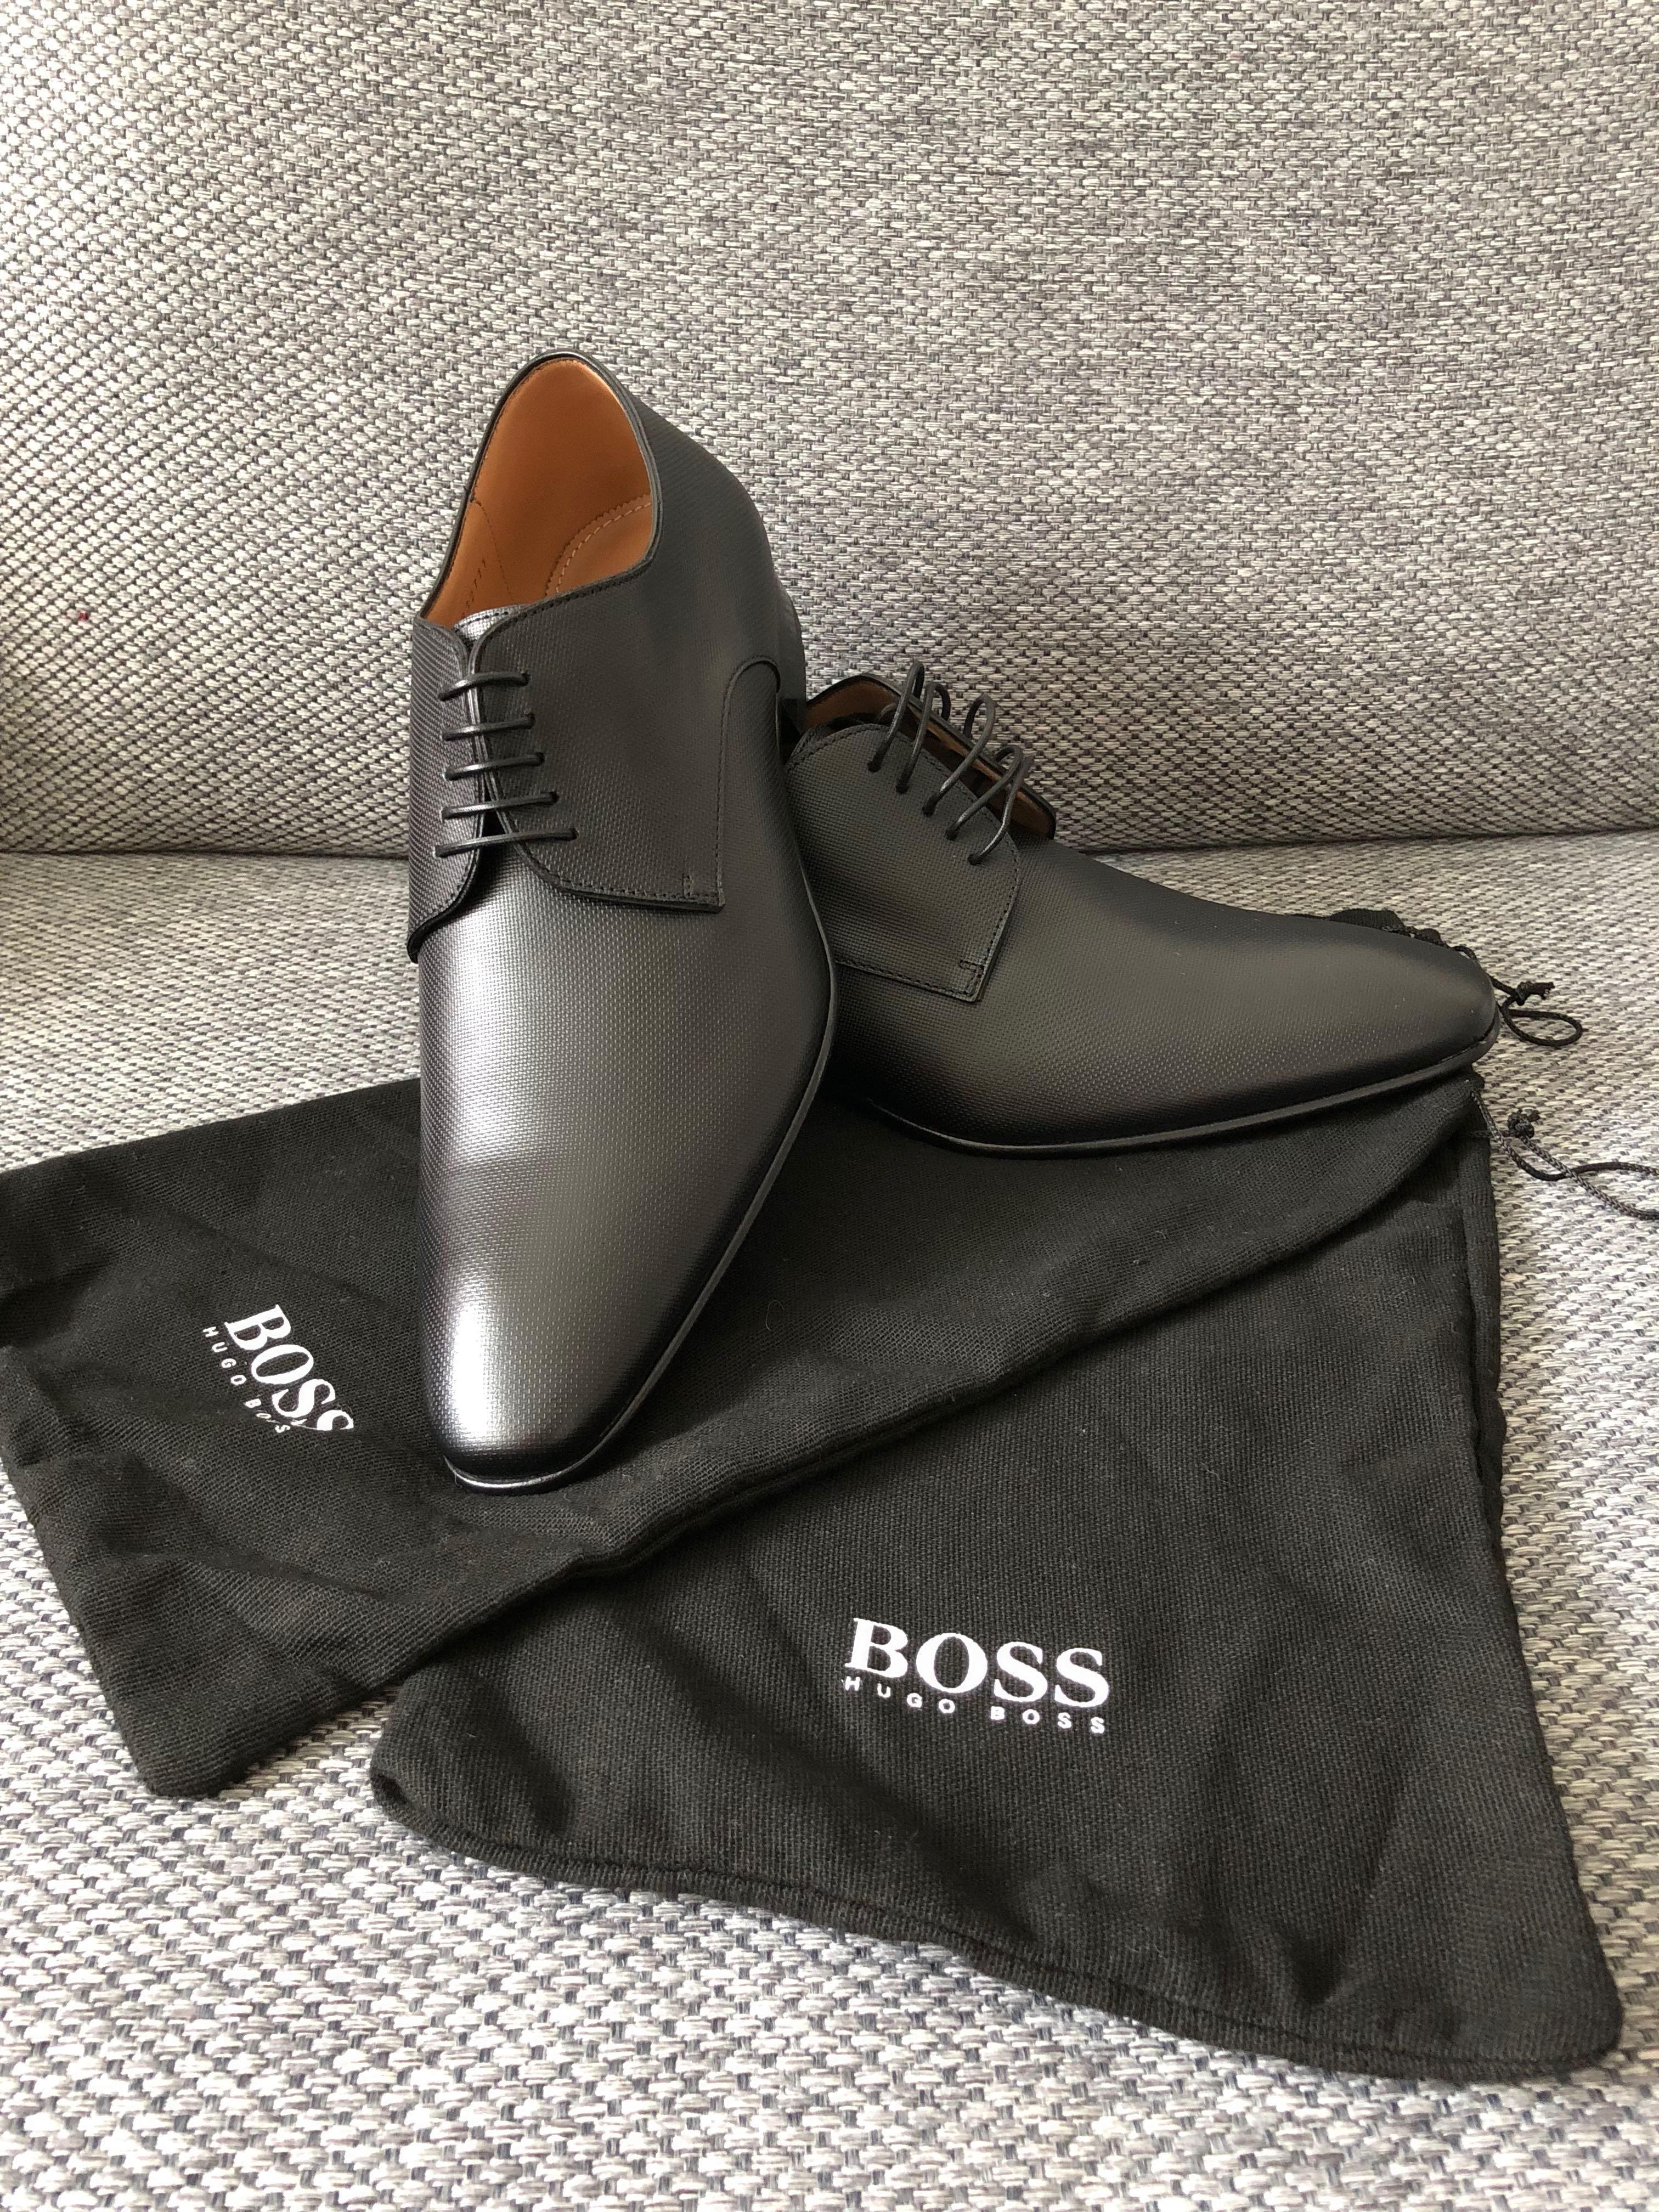 new hugo boss shoes